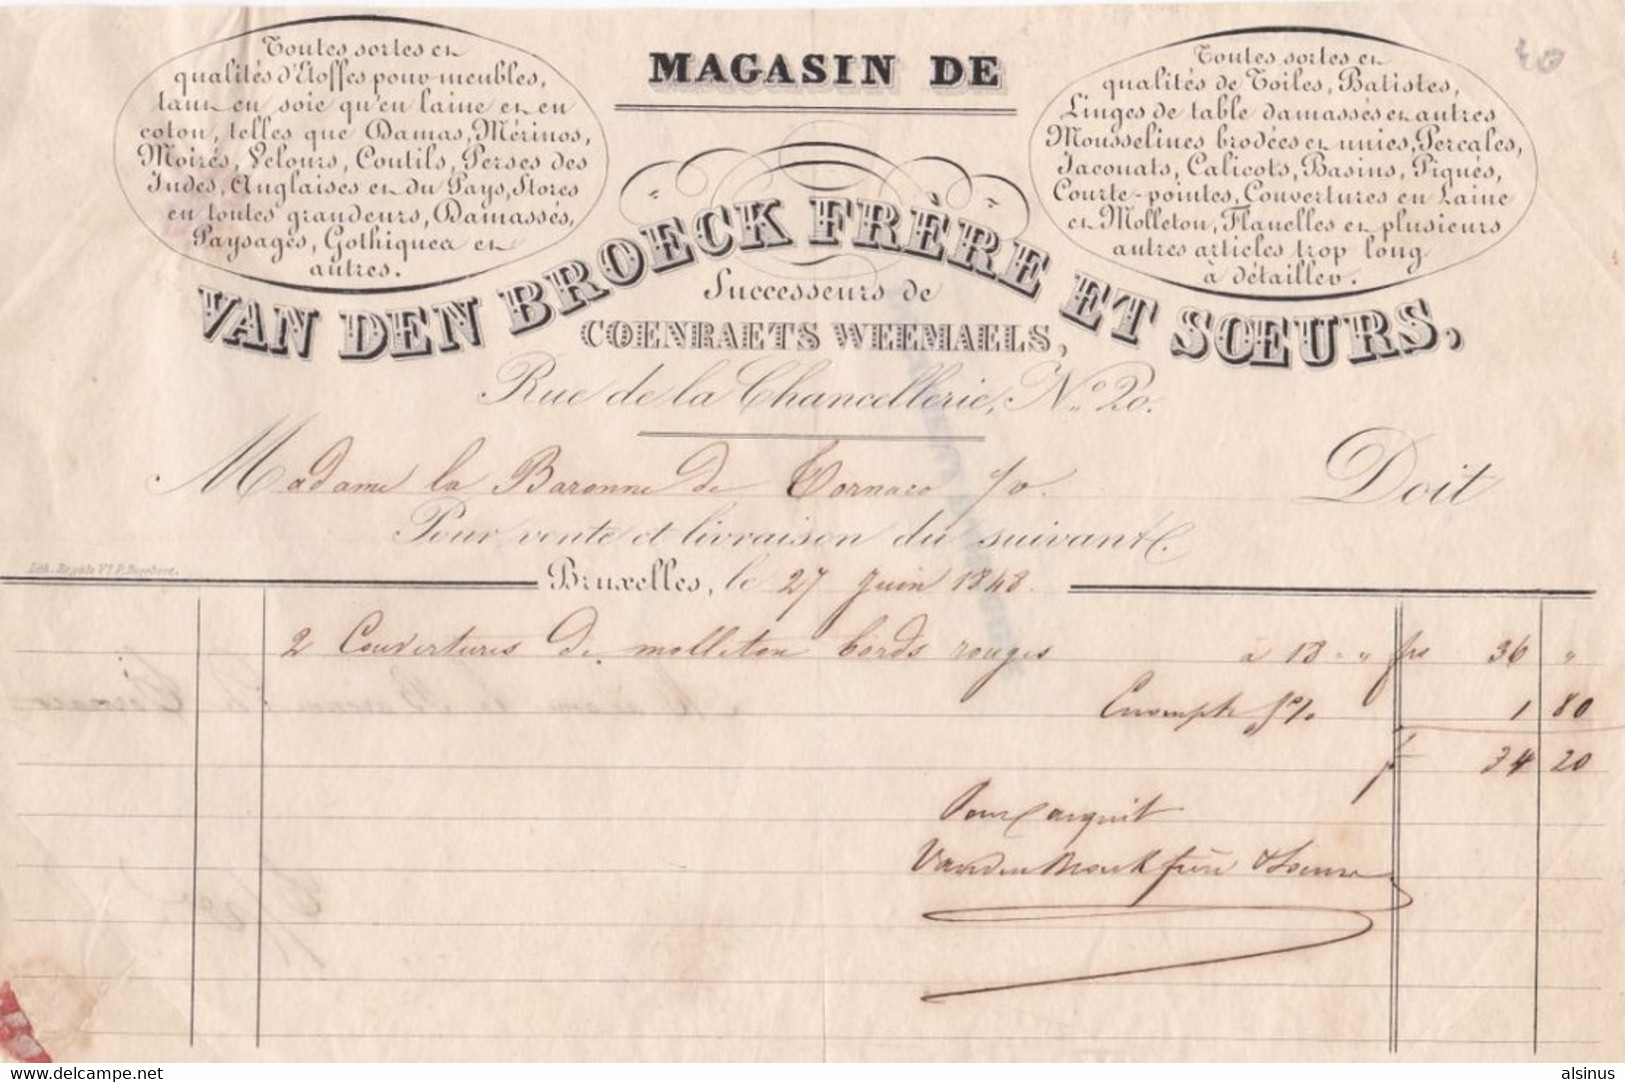 BRUXELLES - FACTURE DE 1848 ADRESSEE A MADAME LA BARONNE DE TORNARO - MAGASIN VAN DEB BROECK FRERE ET SOEURS - Kleidung & Textil